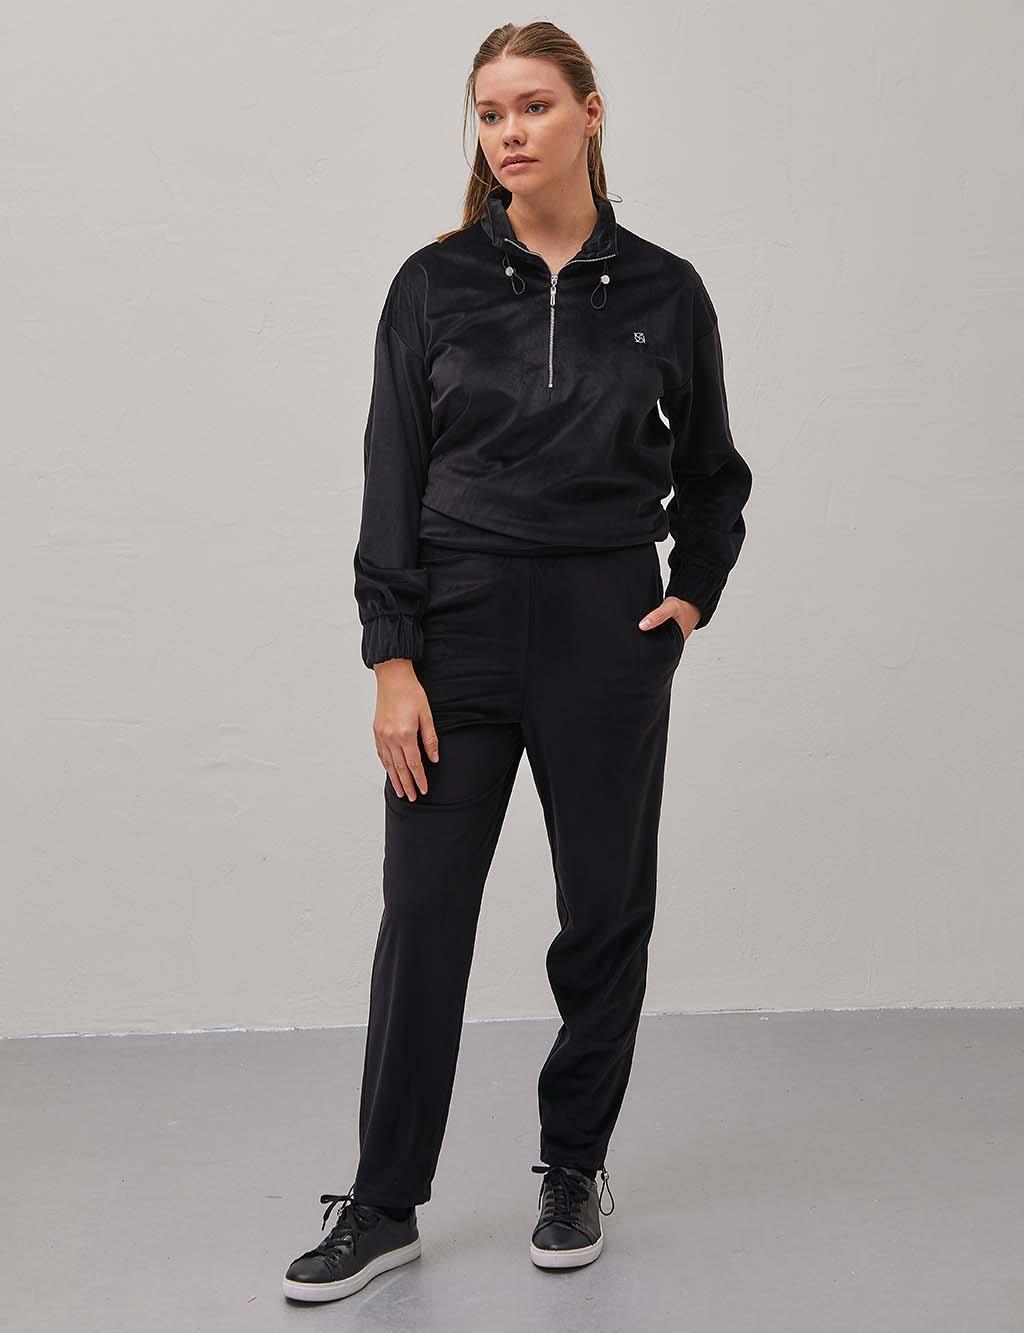 Casual Fit Binary Suit Black - Kayra.com